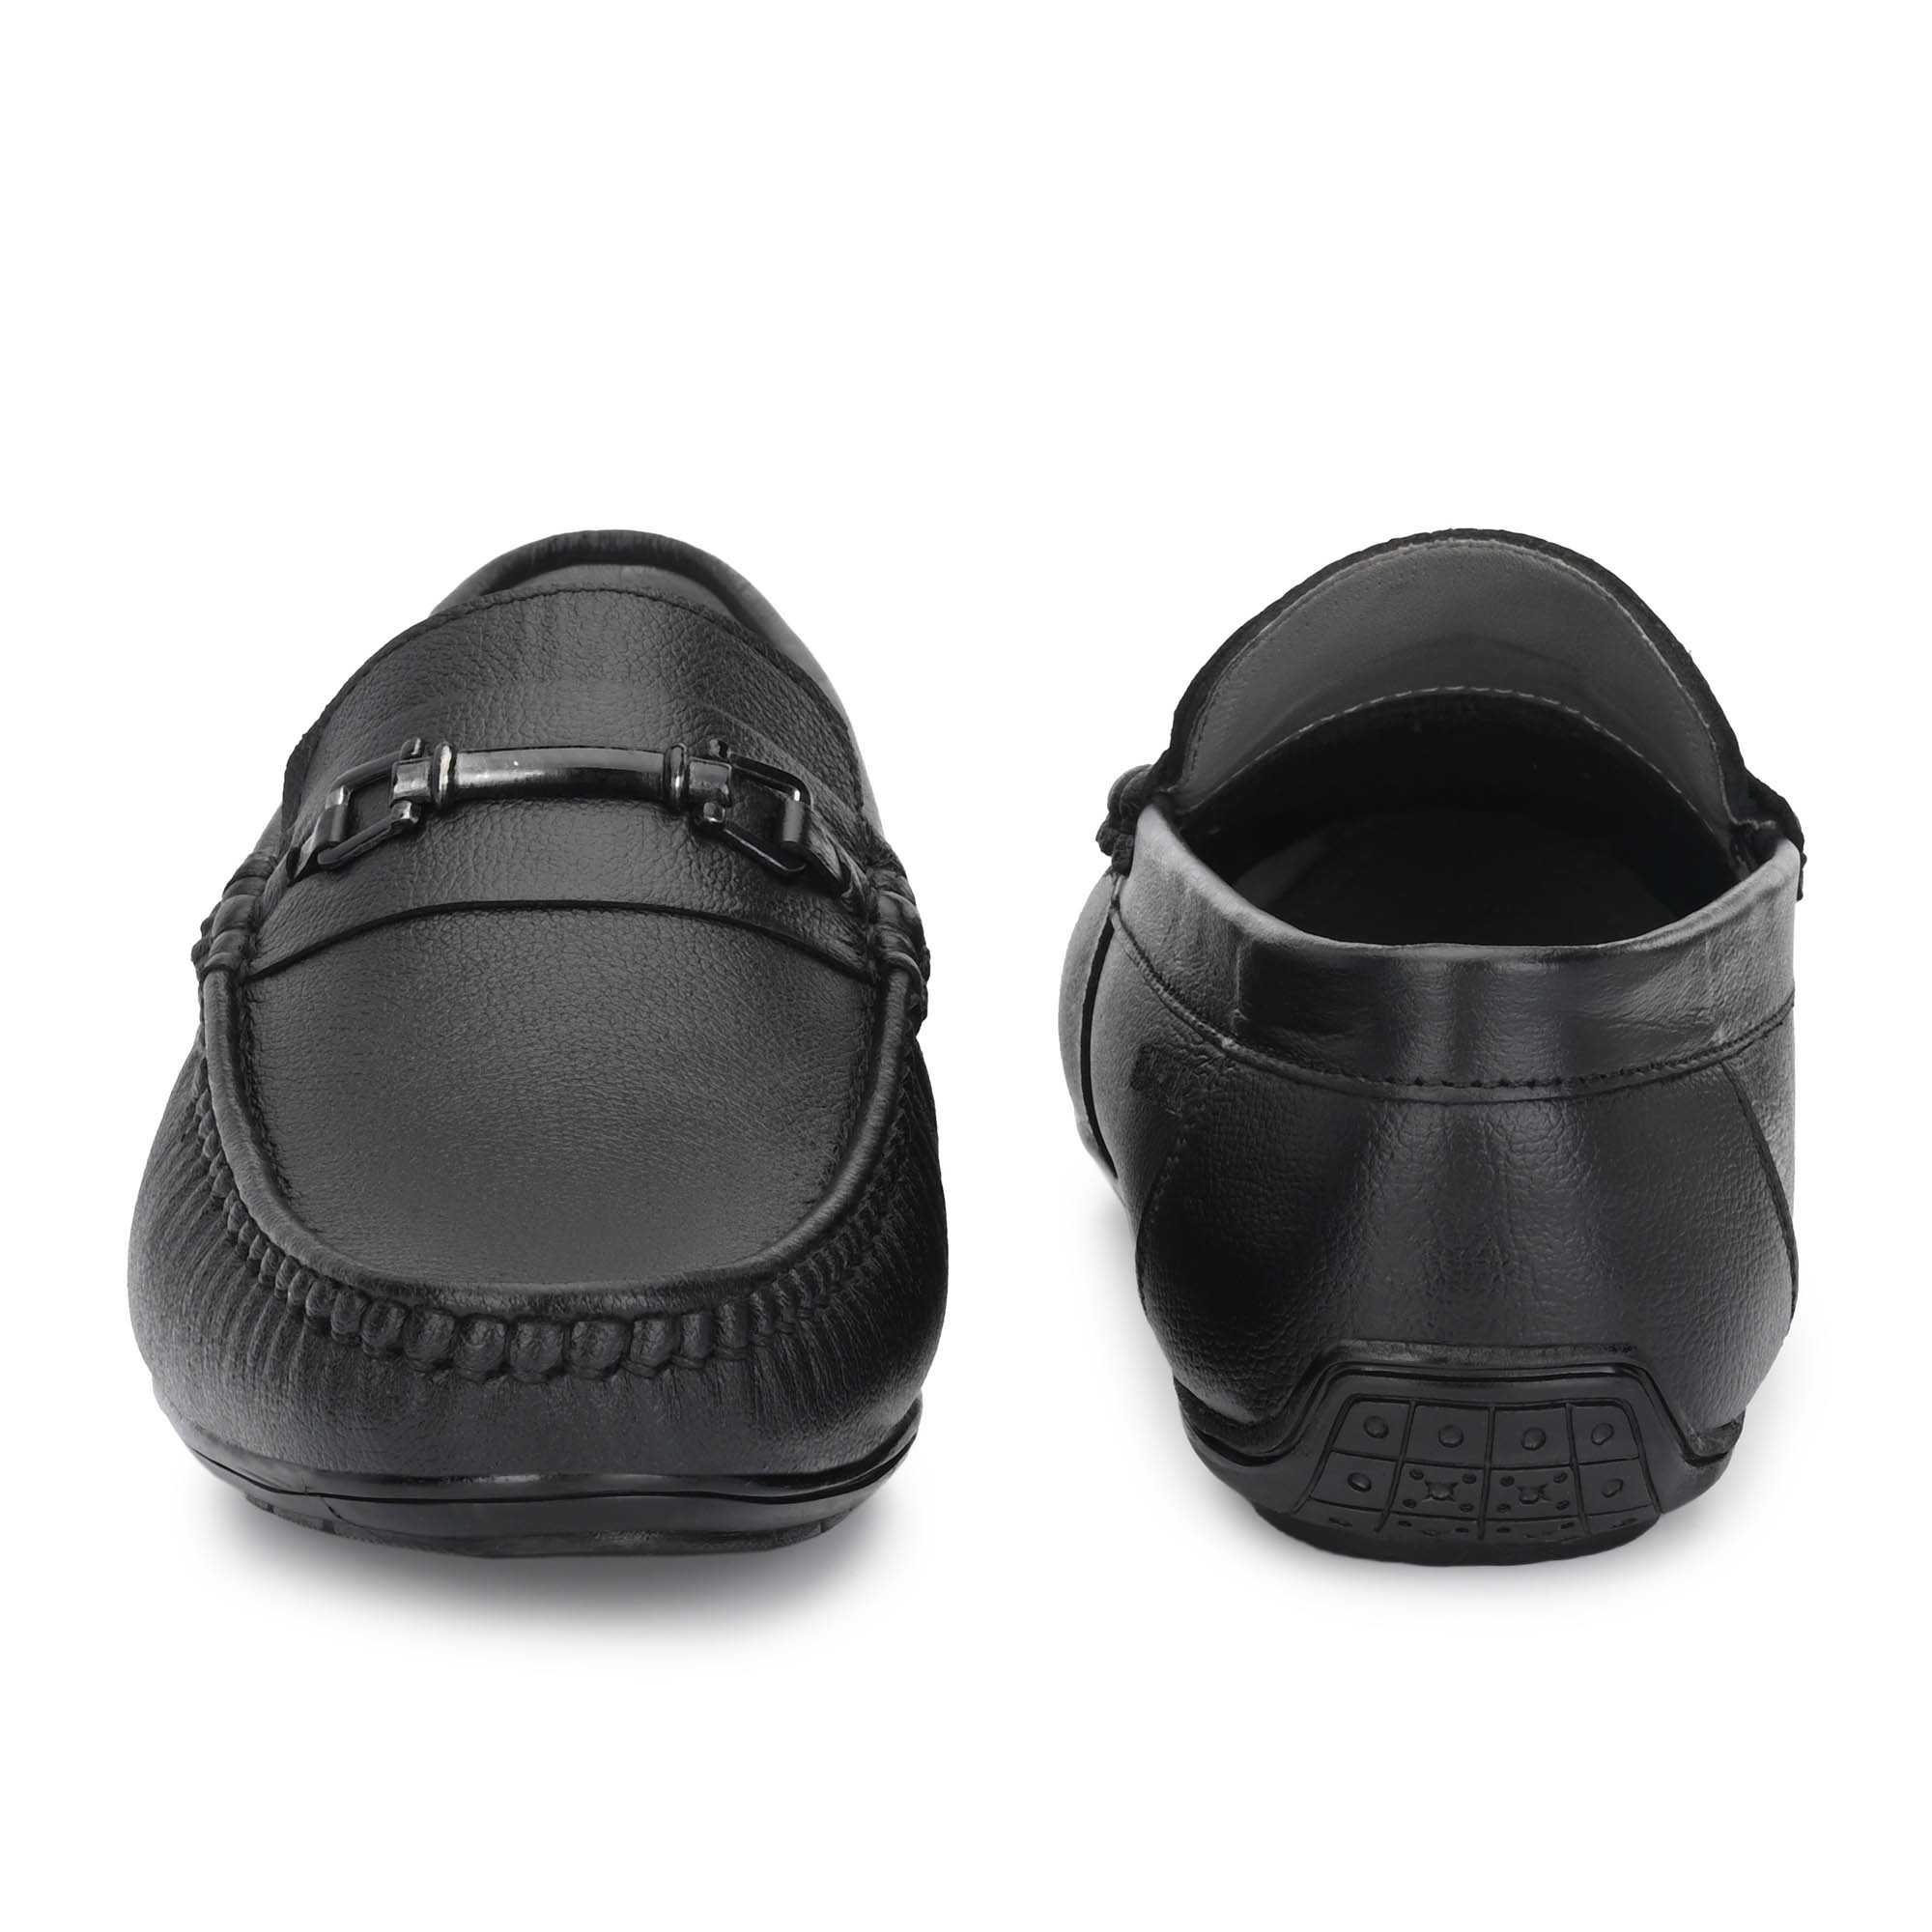 Movin Air Go Modish Men's Lightweight Smart Premium Leather Loafers Shoe  Brown Color